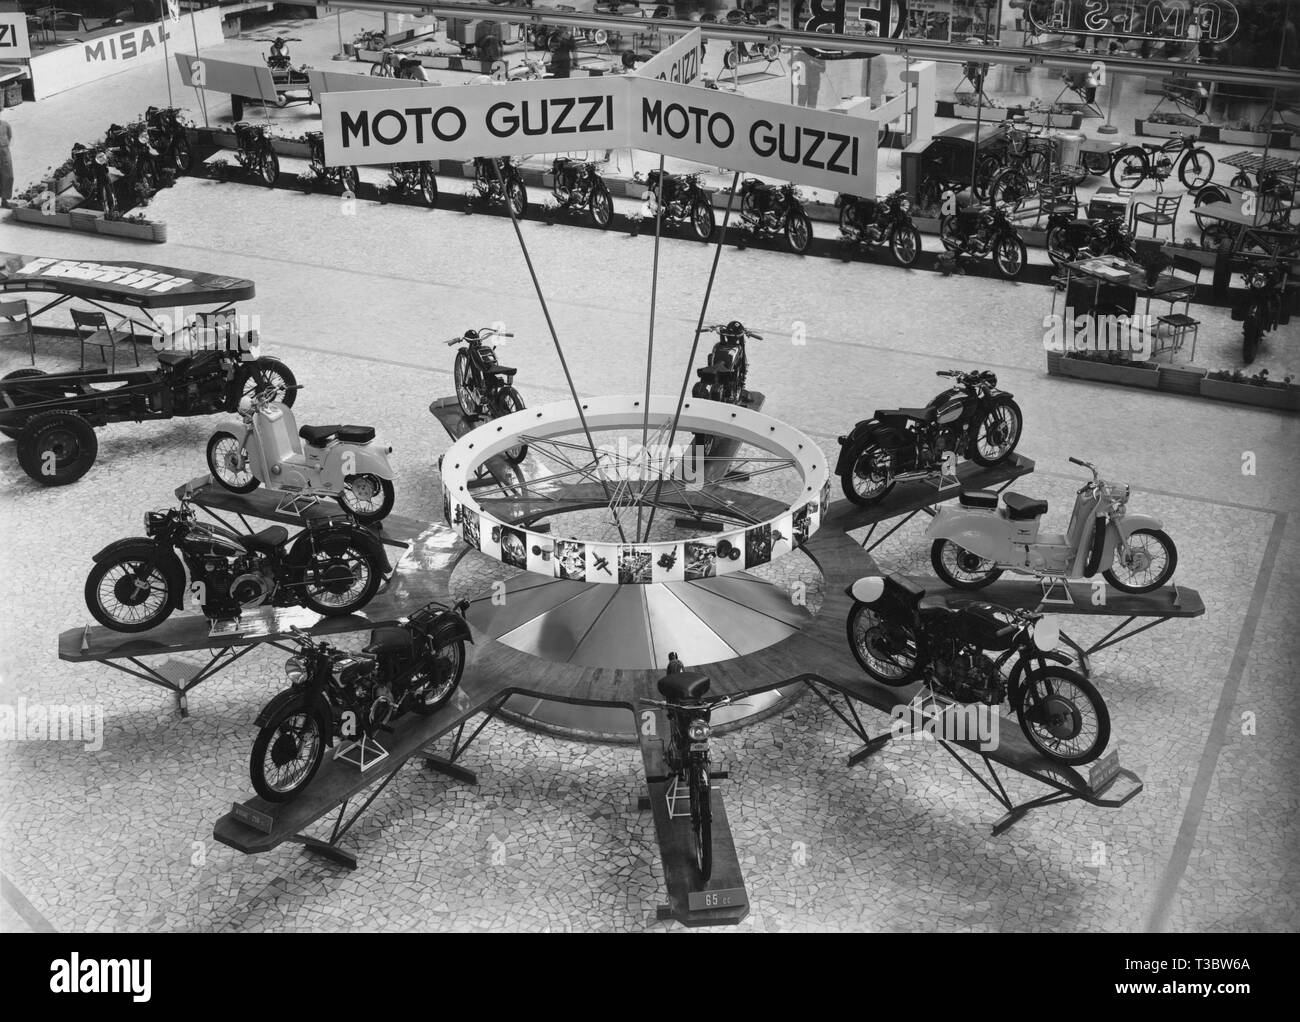 moto guzzi, fiera di milano, milan, italy, 1950 Stock Photo